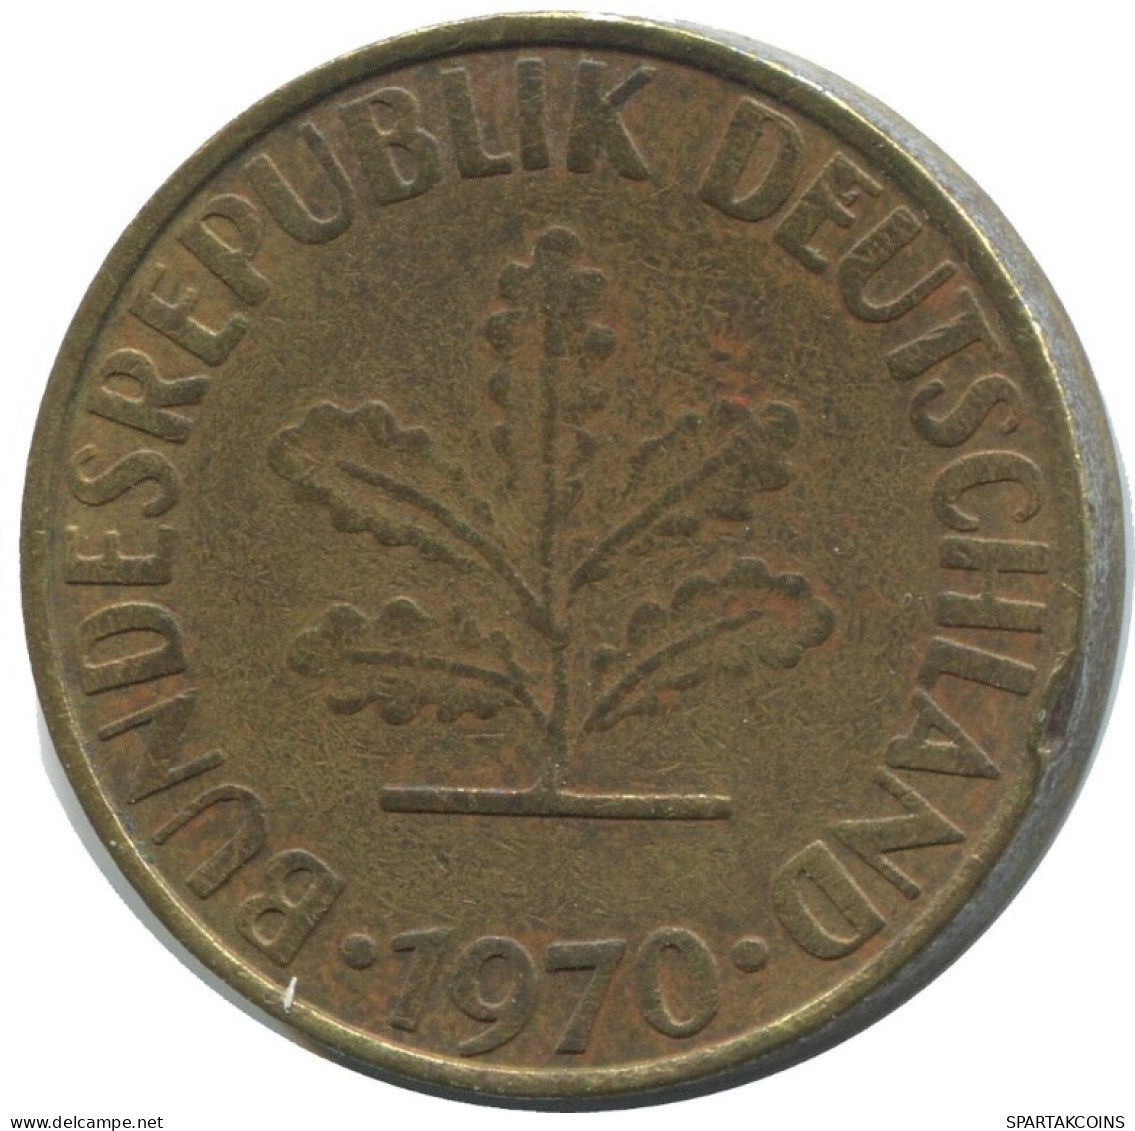 10 PFENNIG 1970 F BRD DEUTSCHLAND Münze GERMANY #AD558.9.D.A - 10 Pfennig